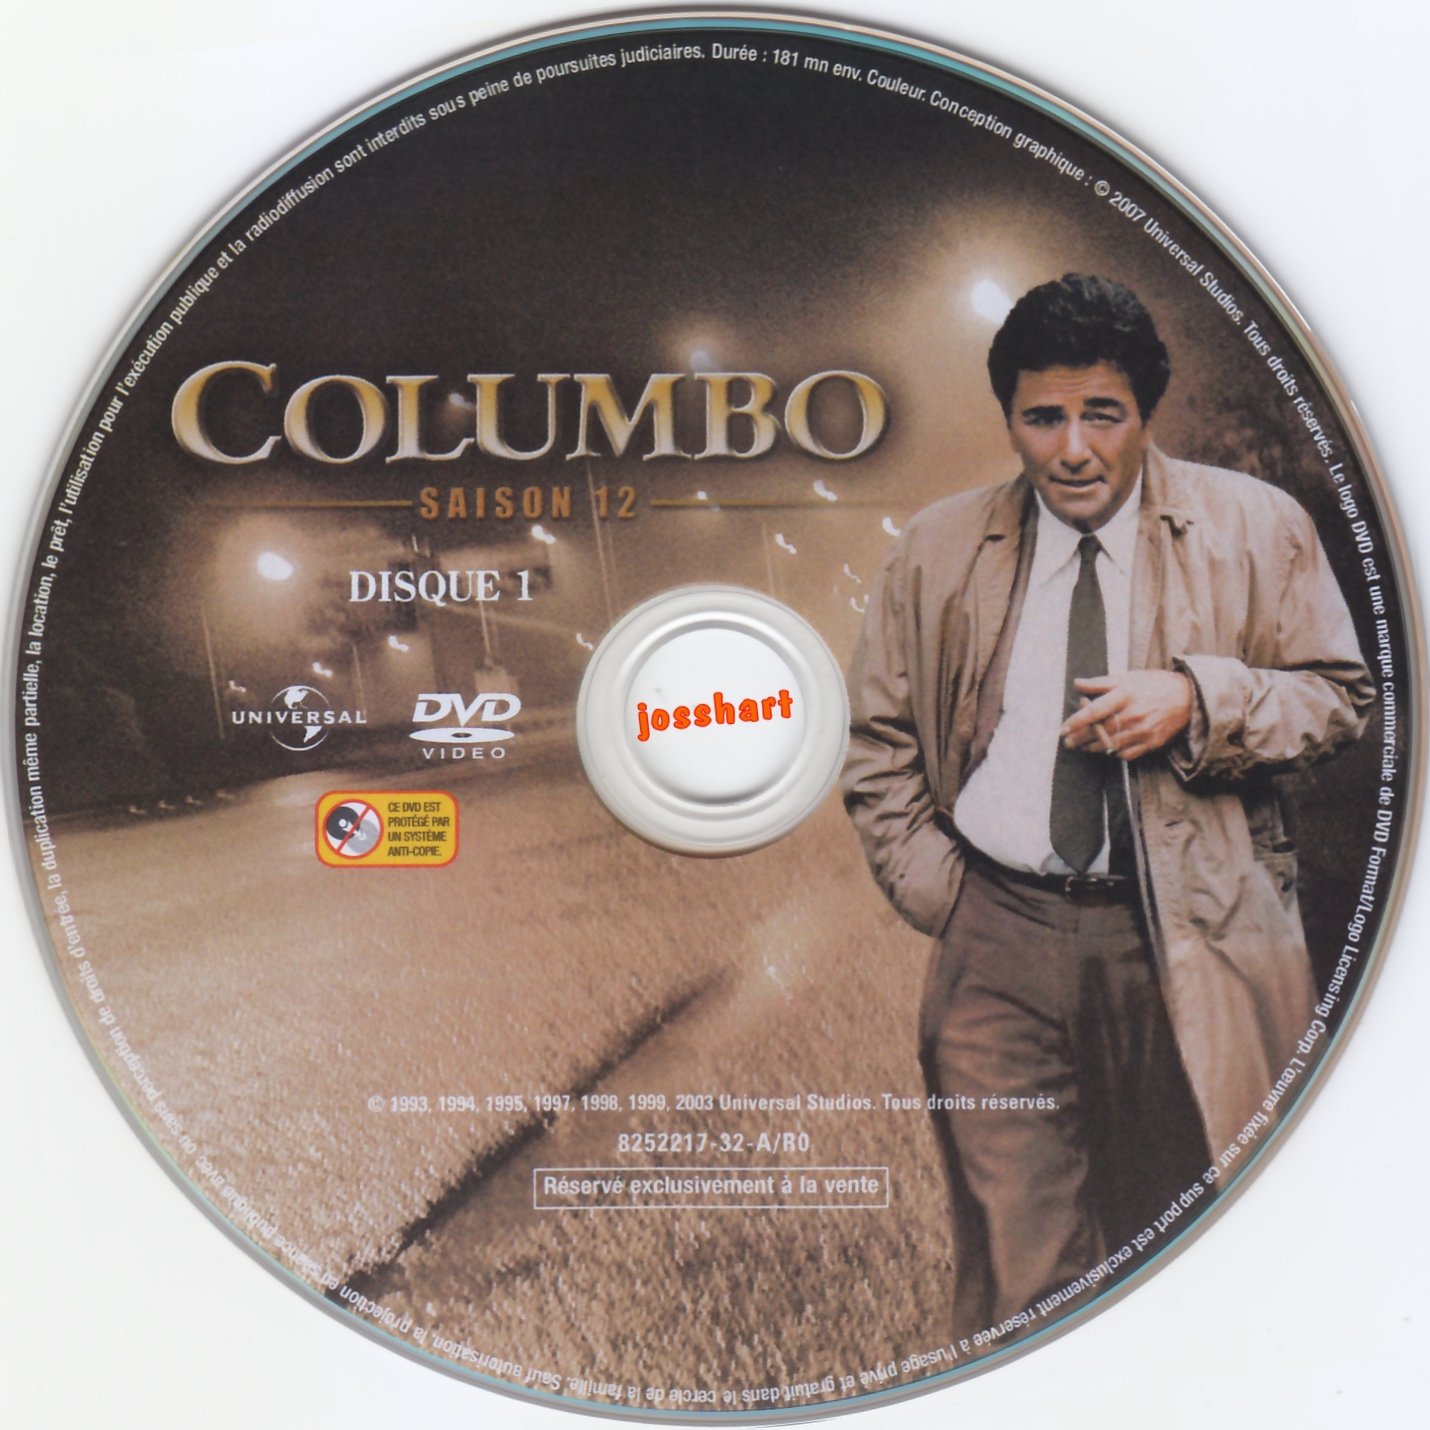 Columbo S12 DISC1